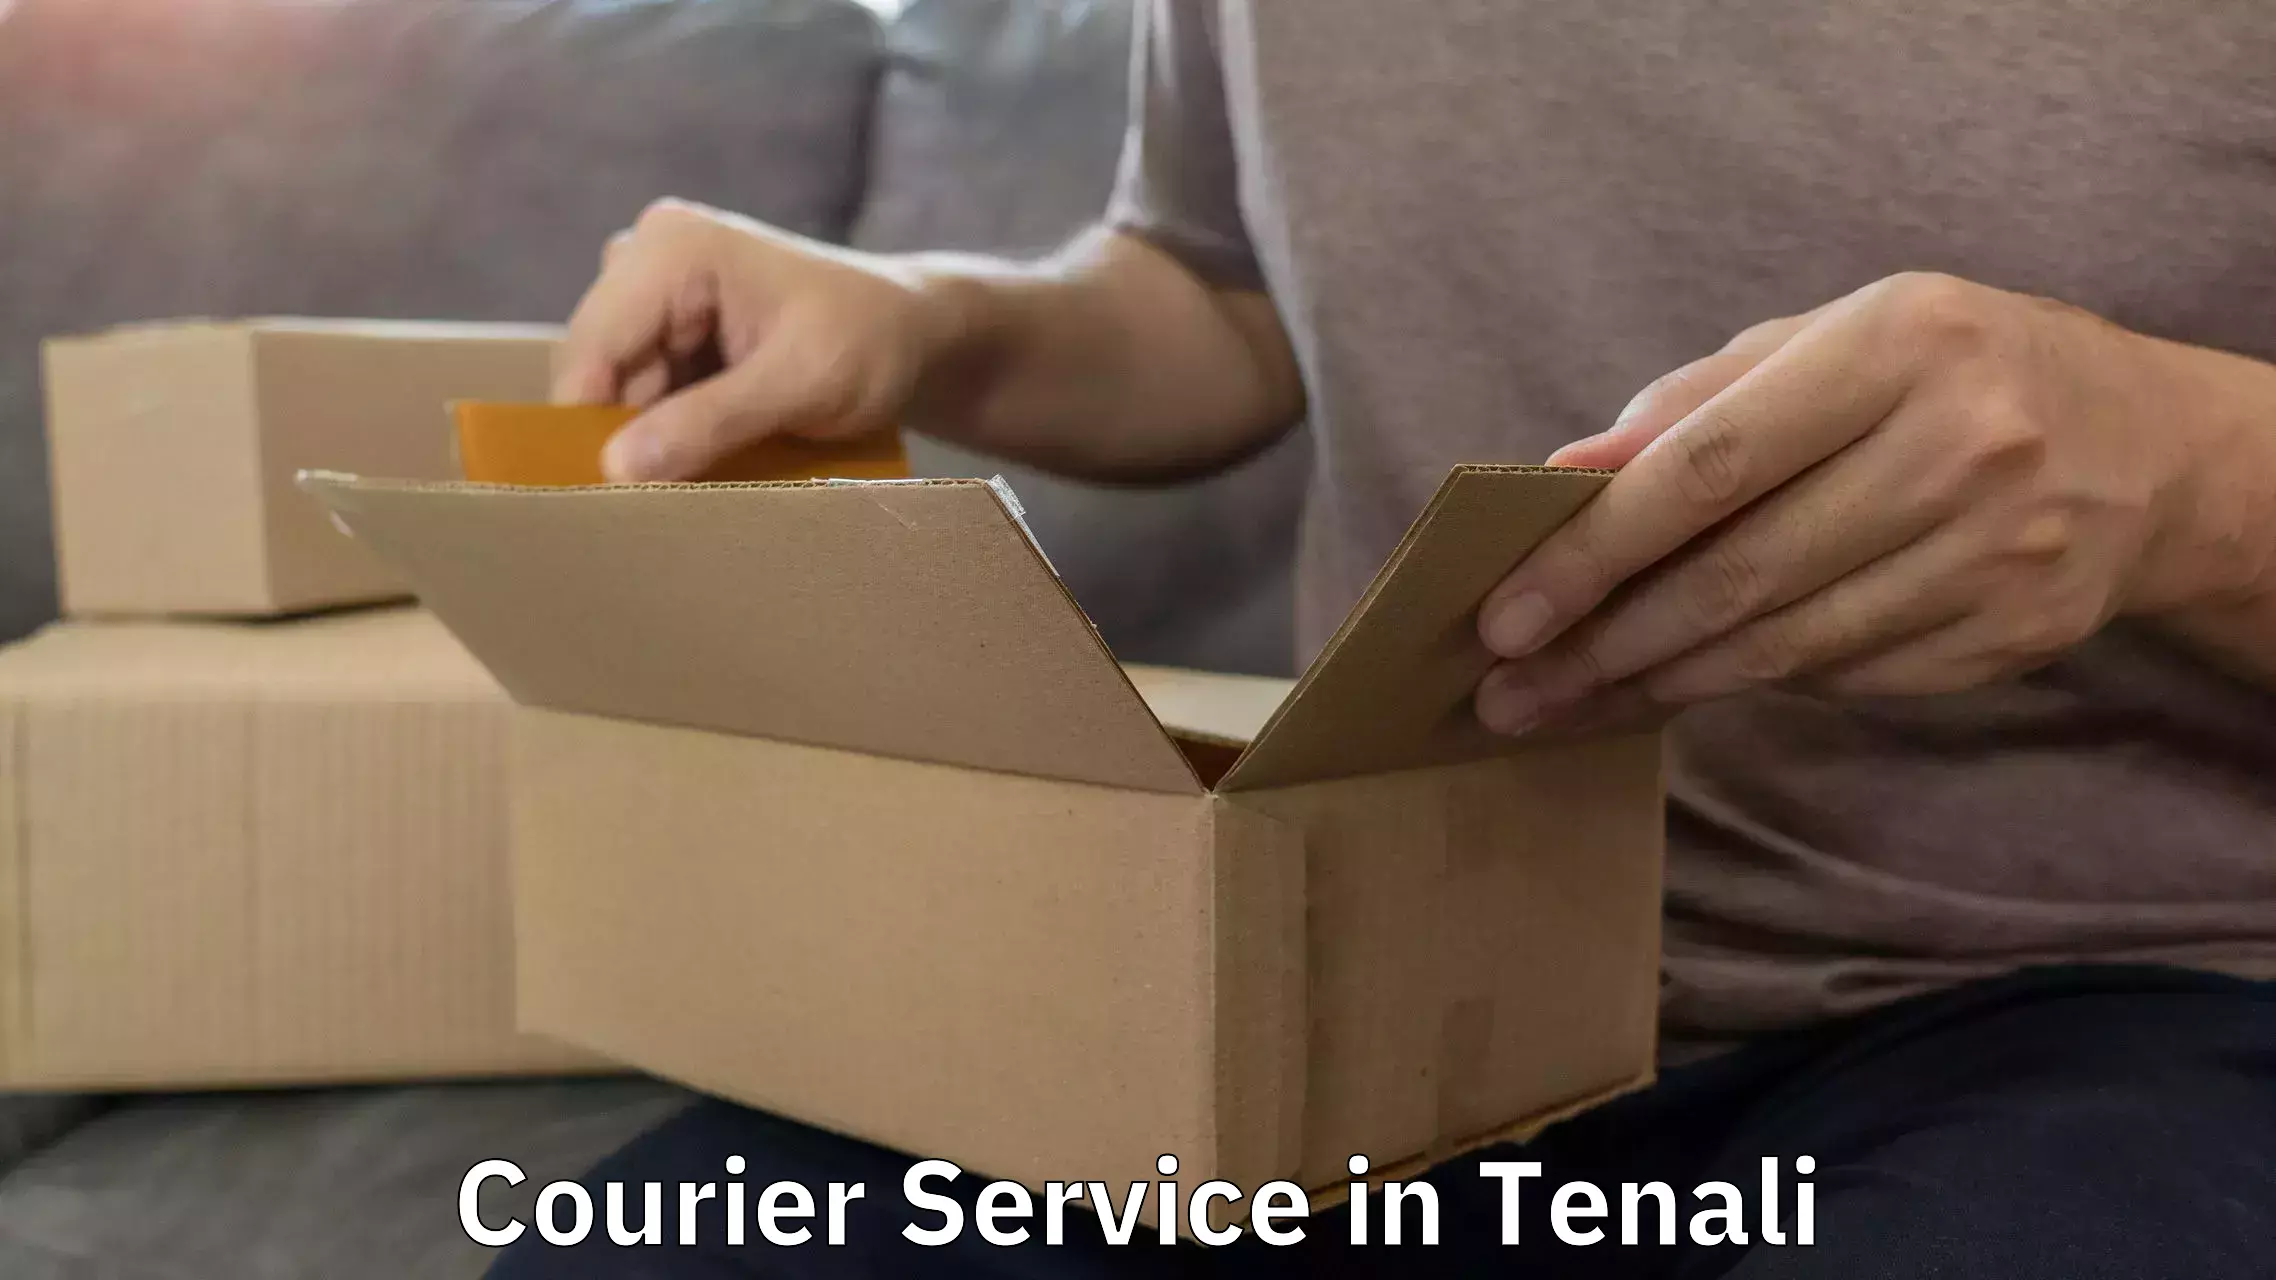 Efficient parcel service in Tenali